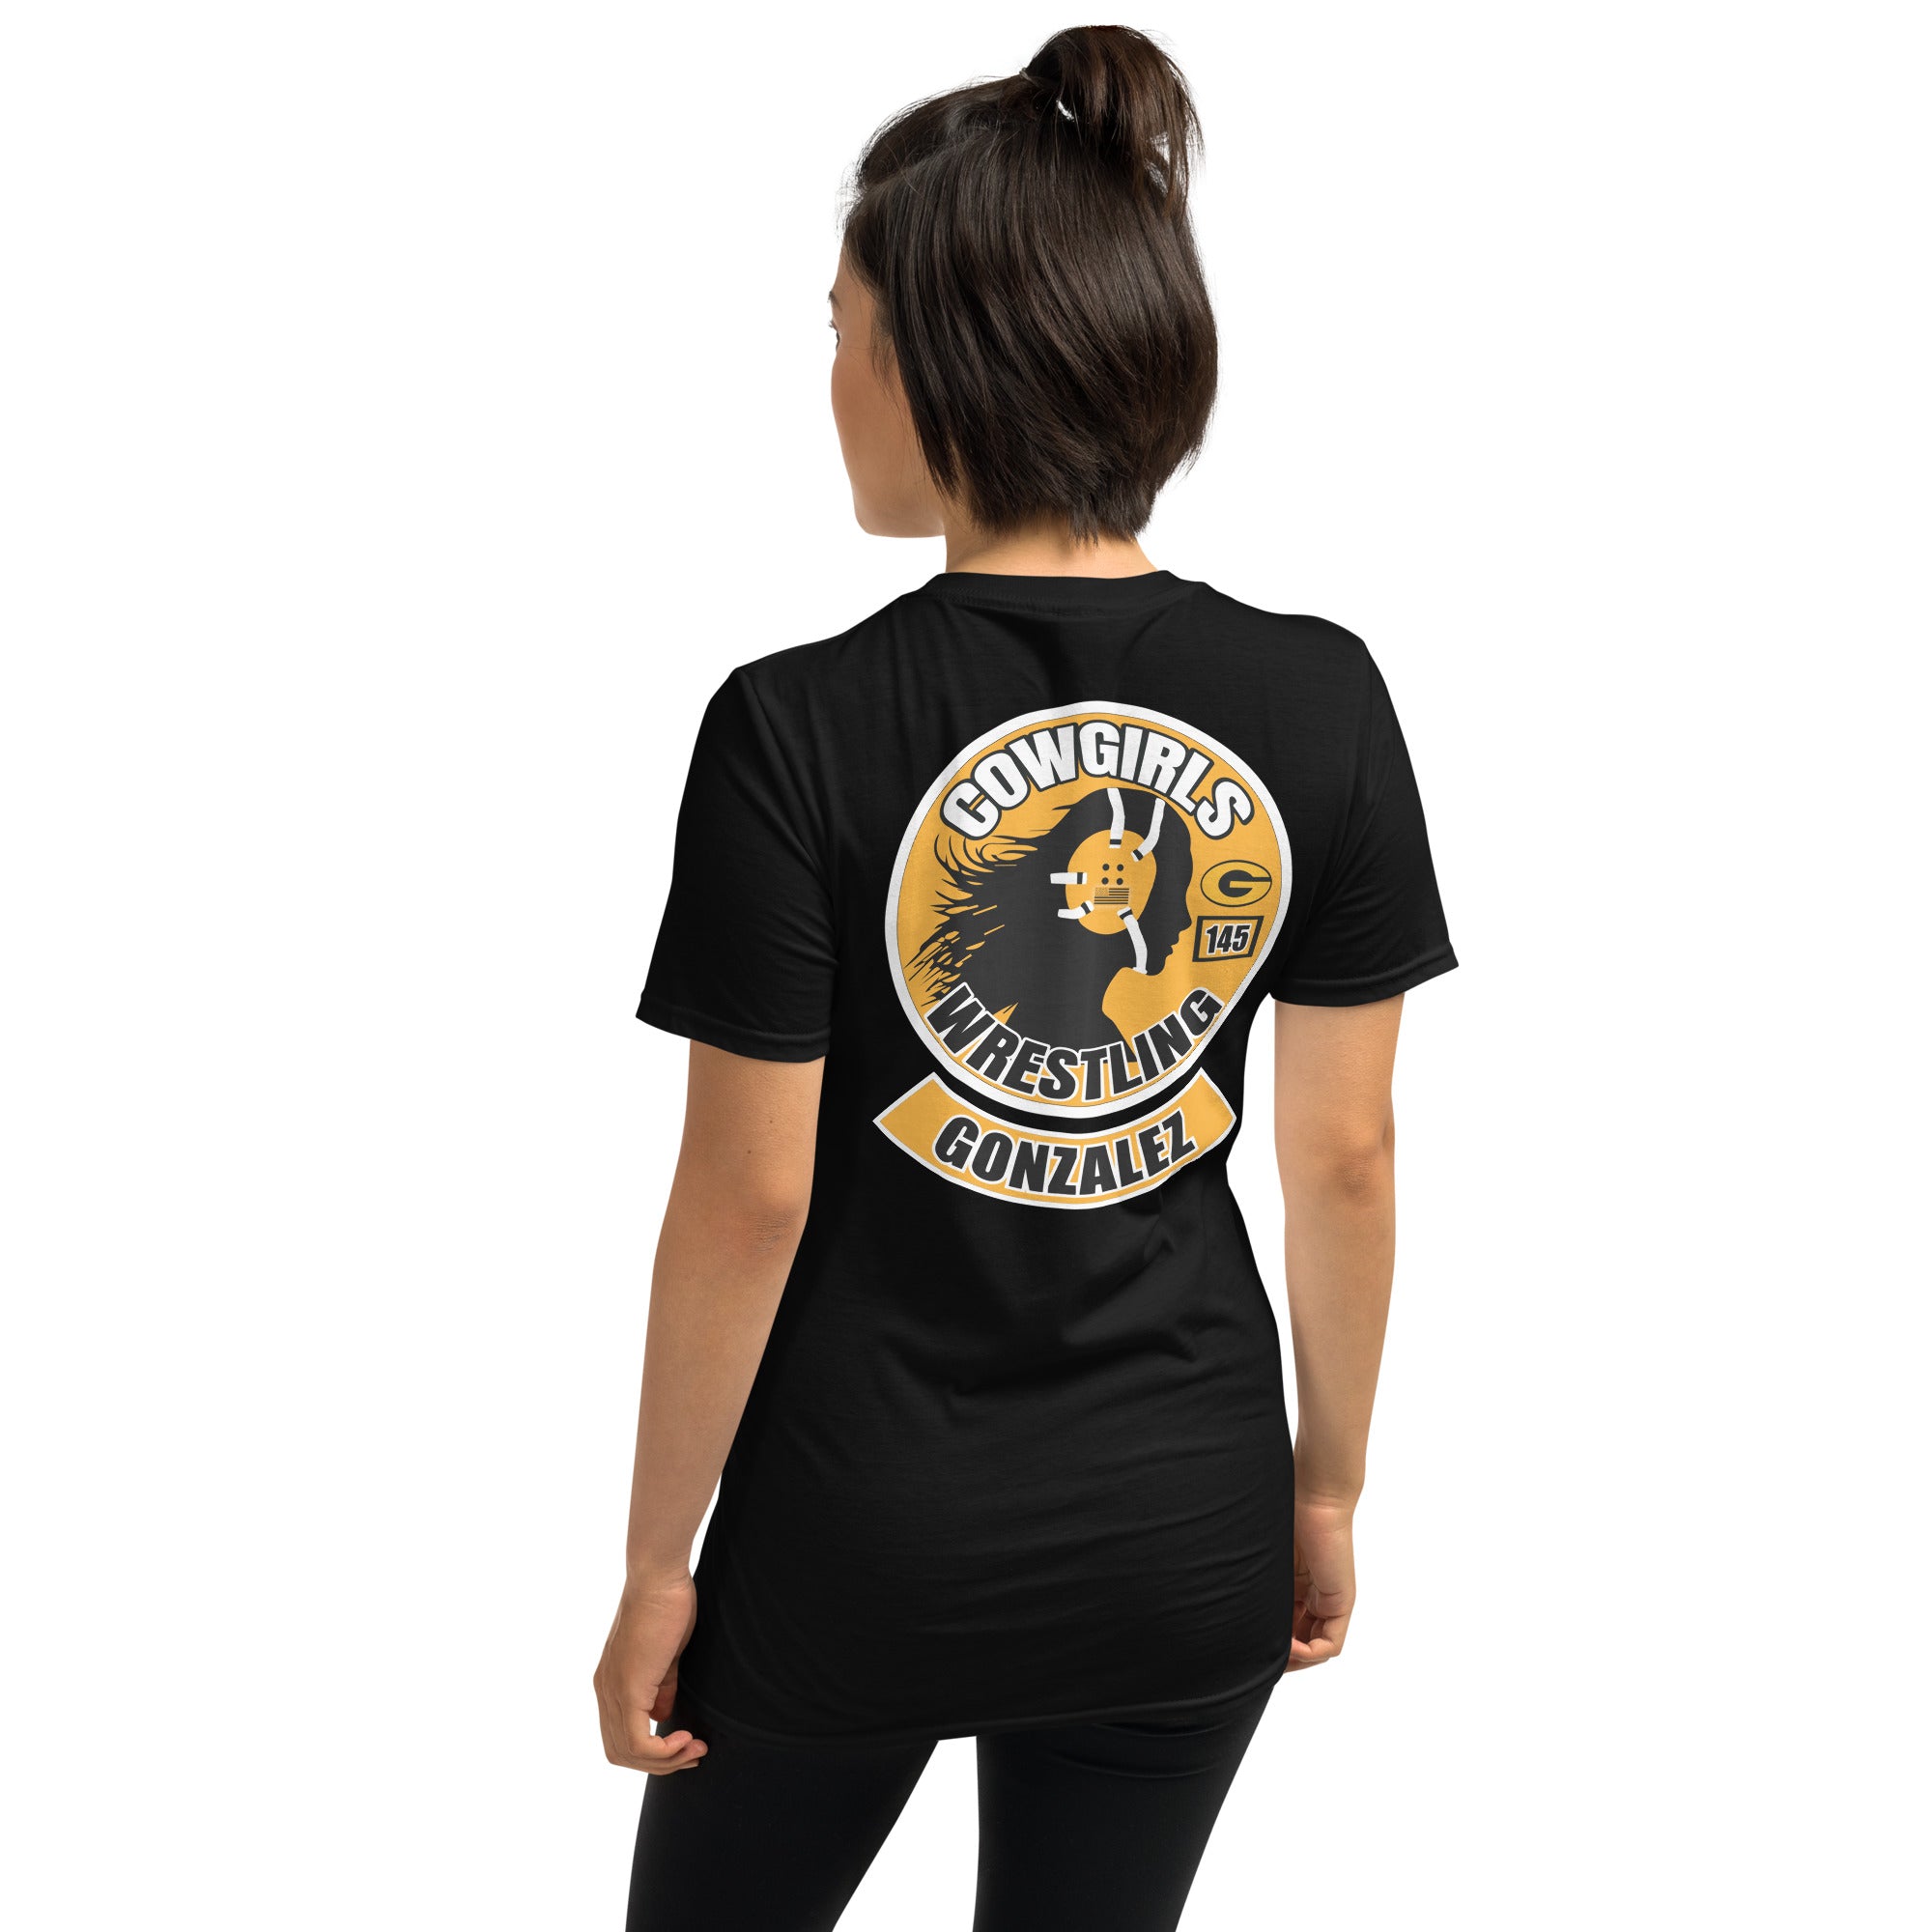 Goodland Cowgirls Wrestling Unisex T-Shirt